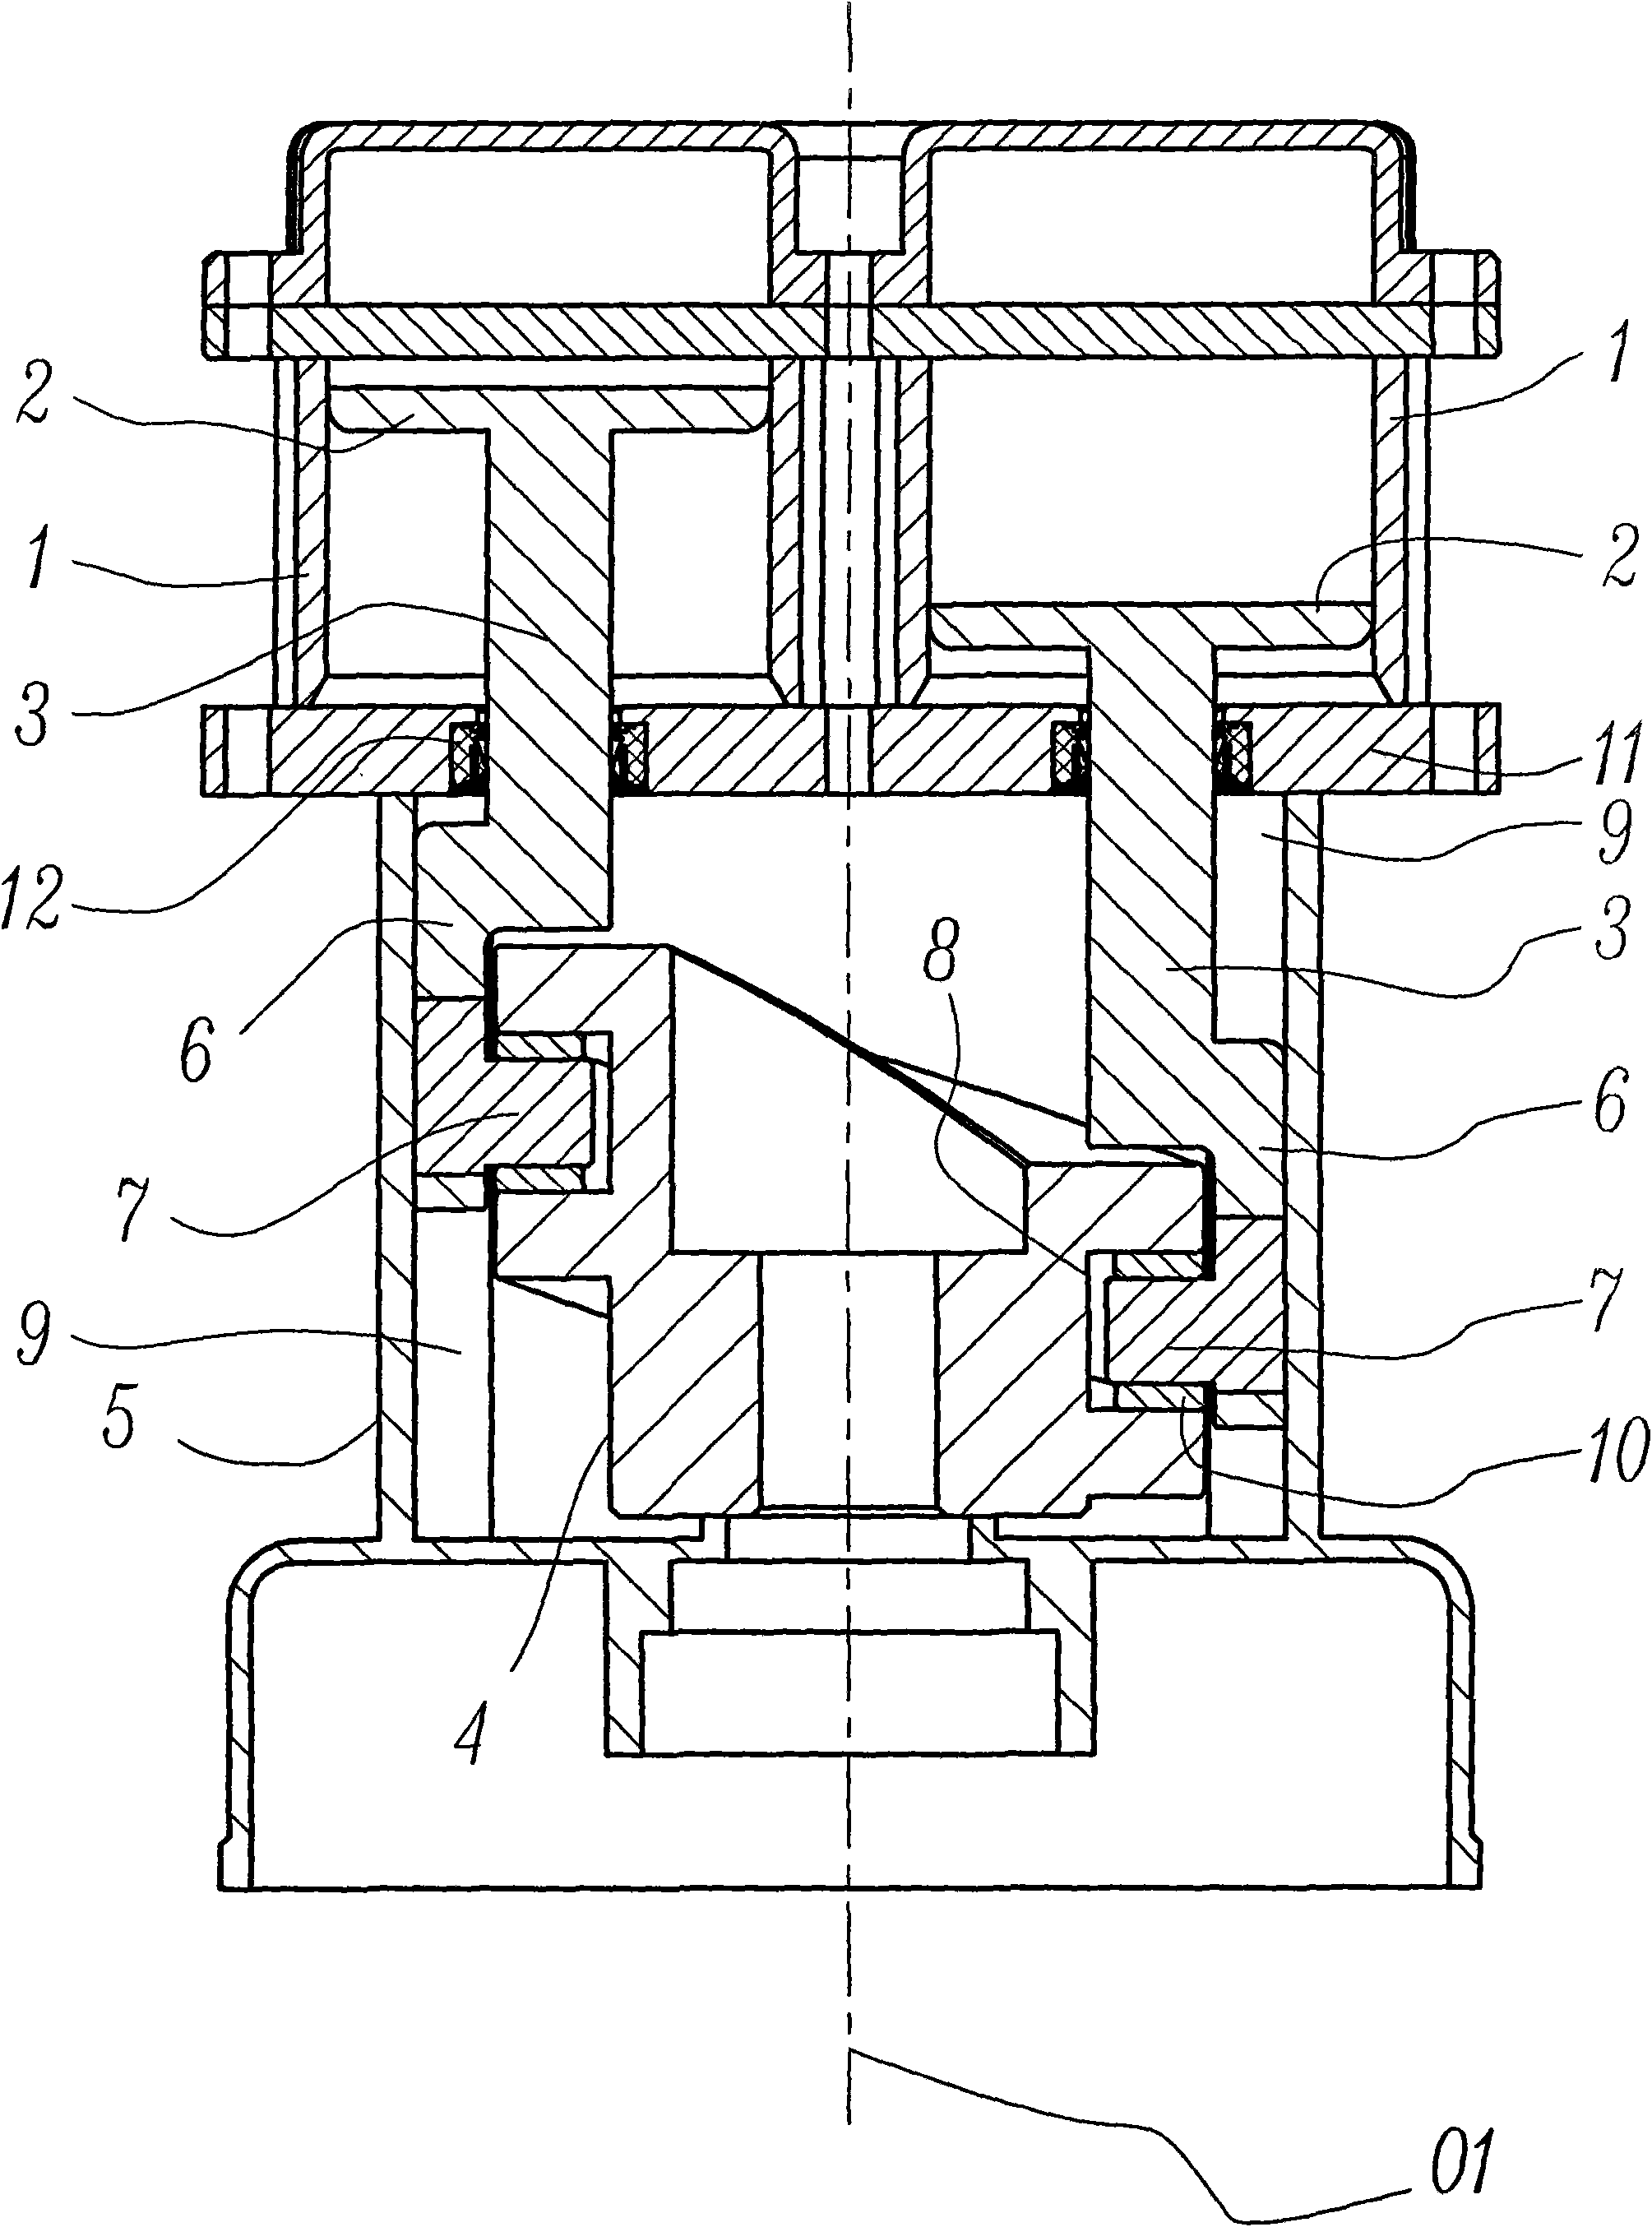 Spin-orbit-type reciprocating piston compressor